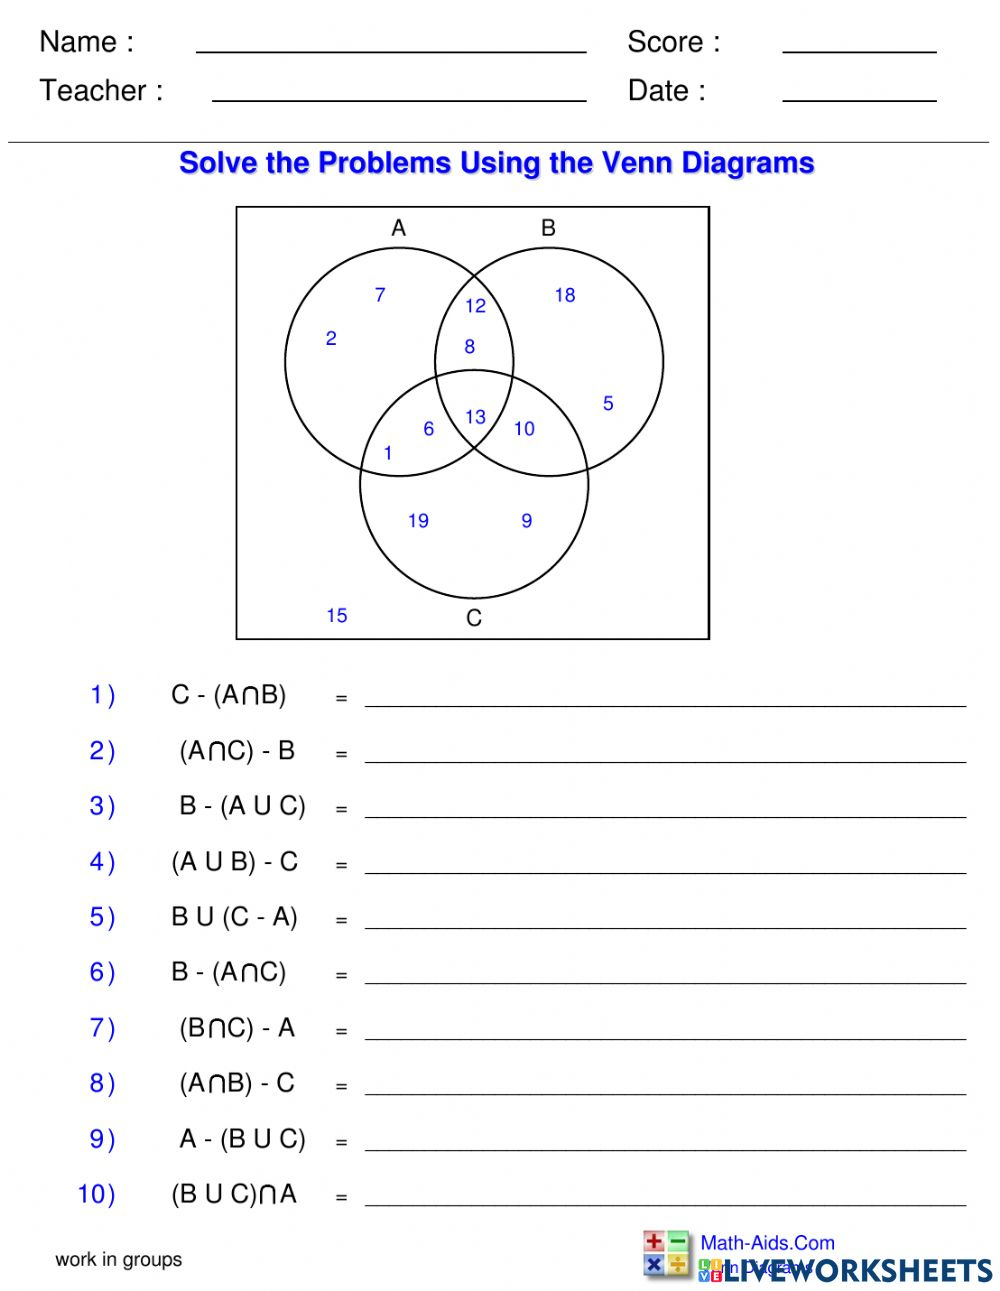 factors-venn-diagram-worksheet-answers-factorworksheets